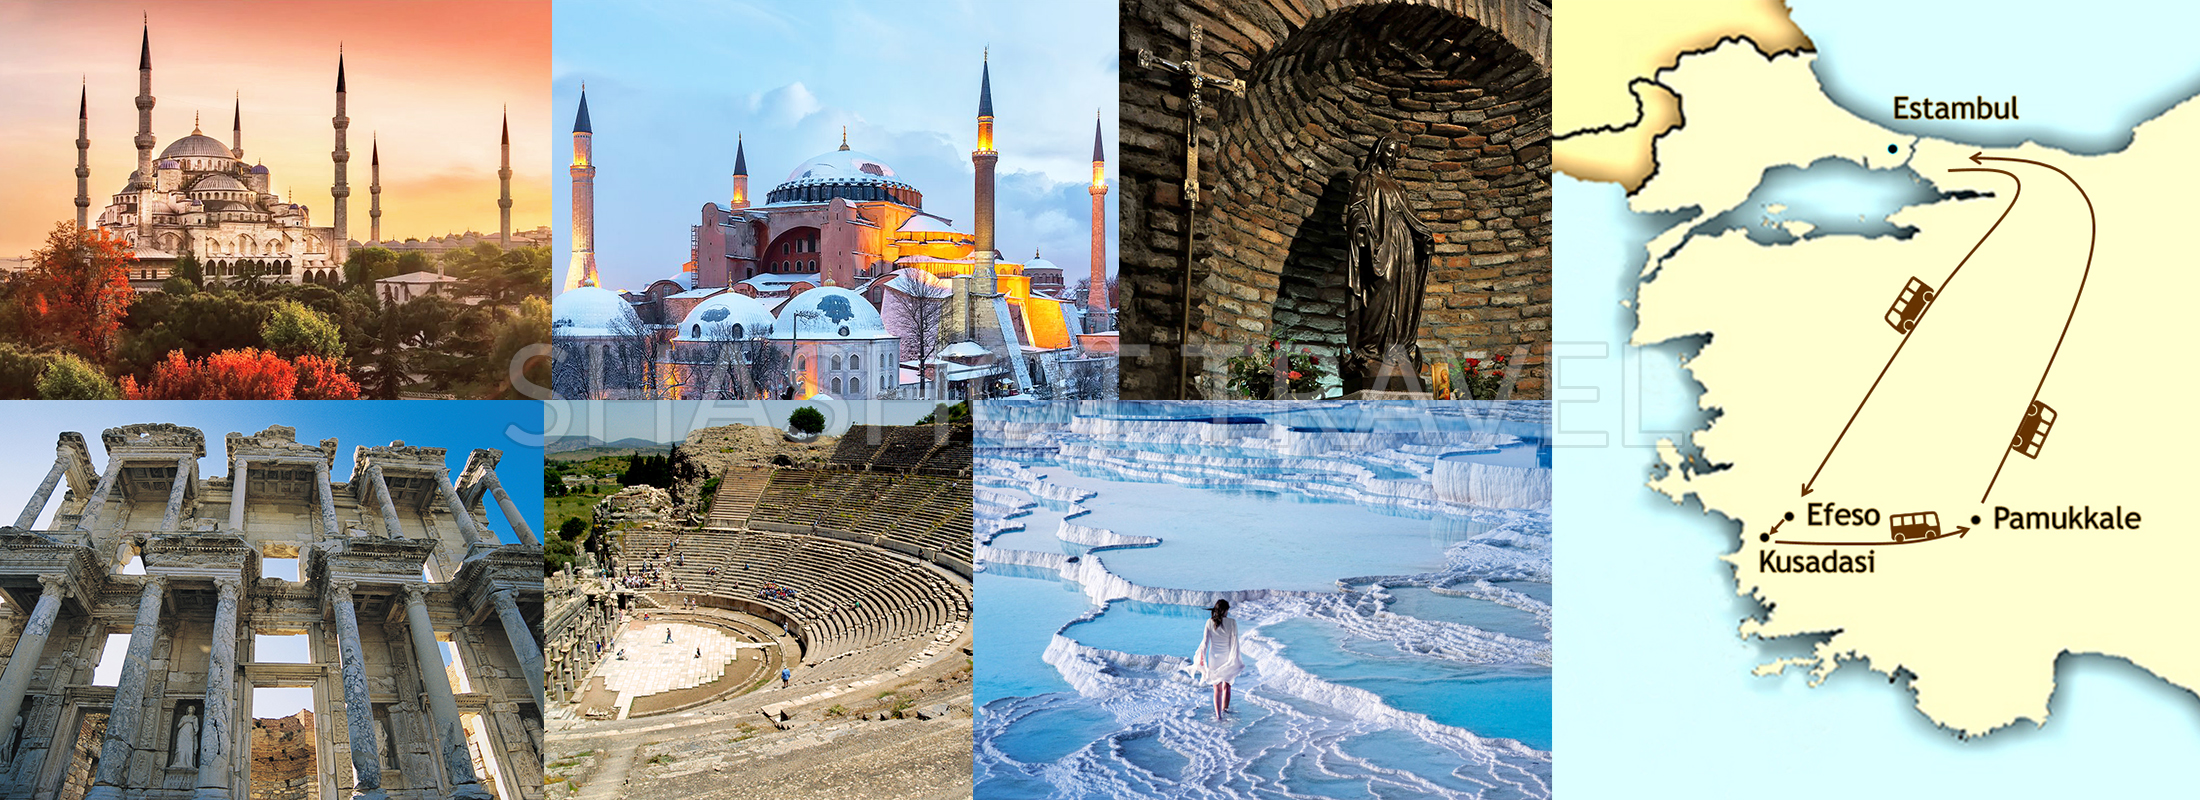 5-dias-estambul-efeso-pamukkale-con-autobus-shashot-travel-istanbul-map